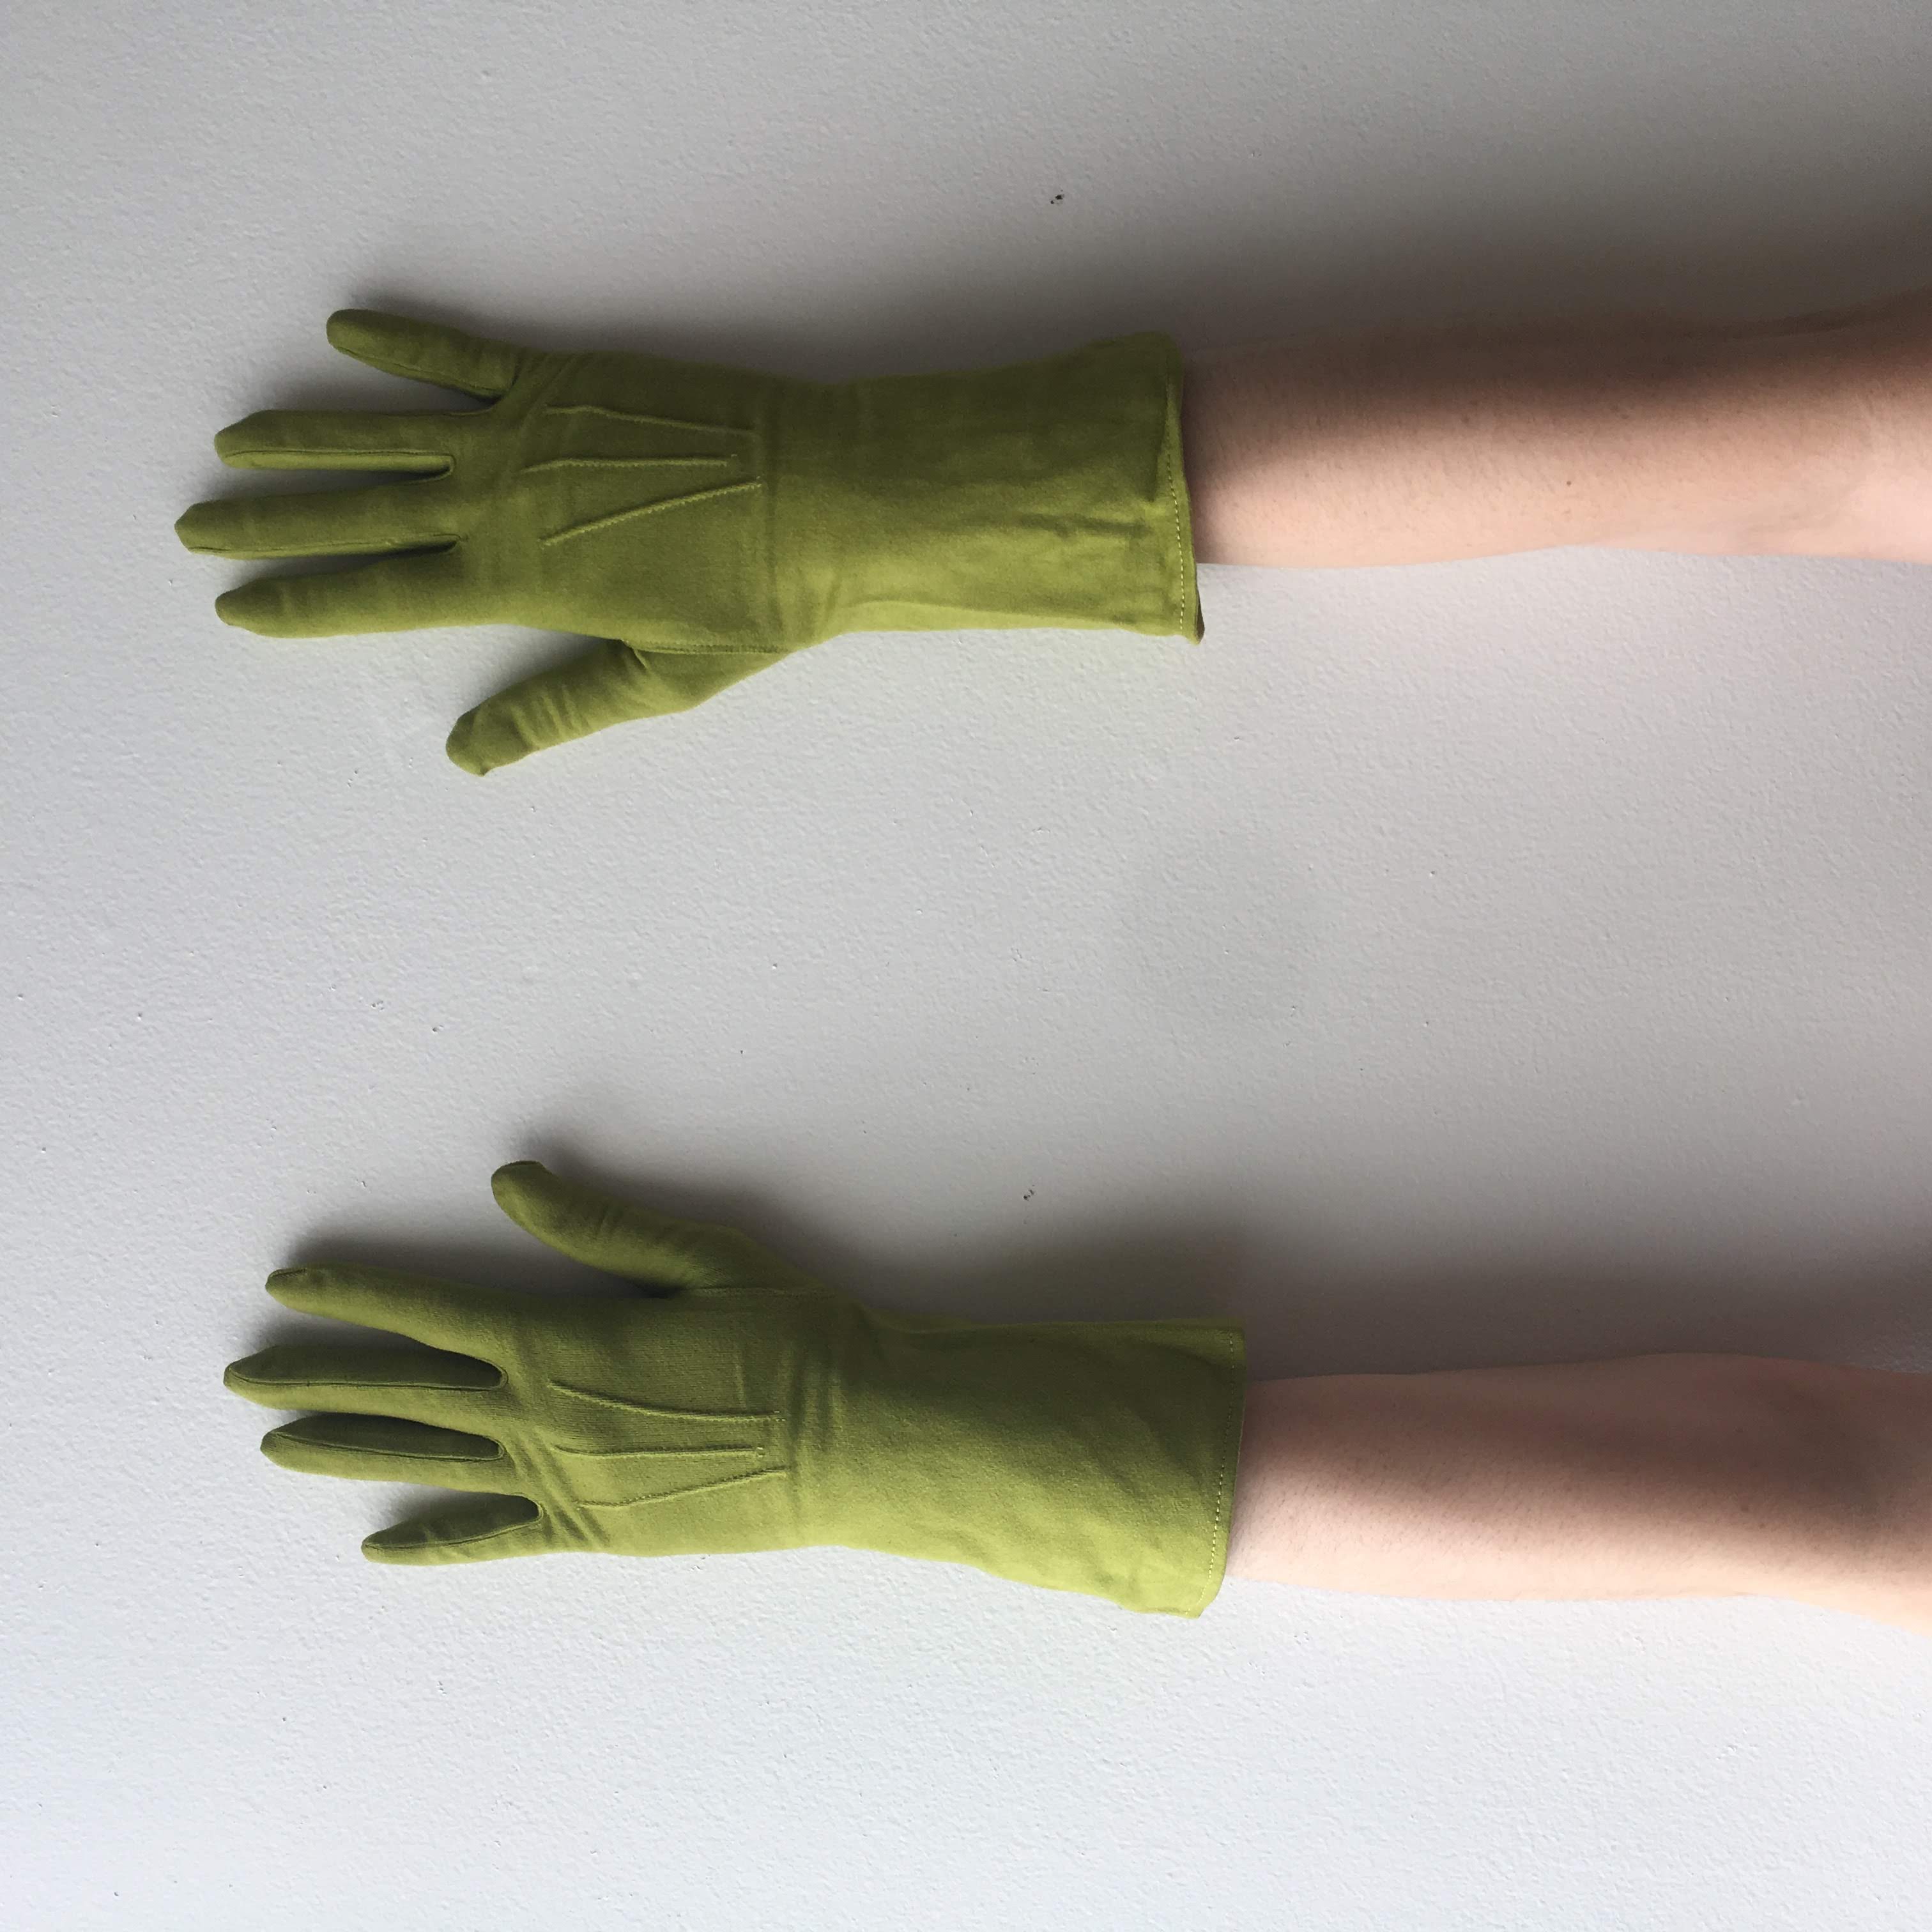 Long Green Rayon Gloves Vintage Accessory POSH